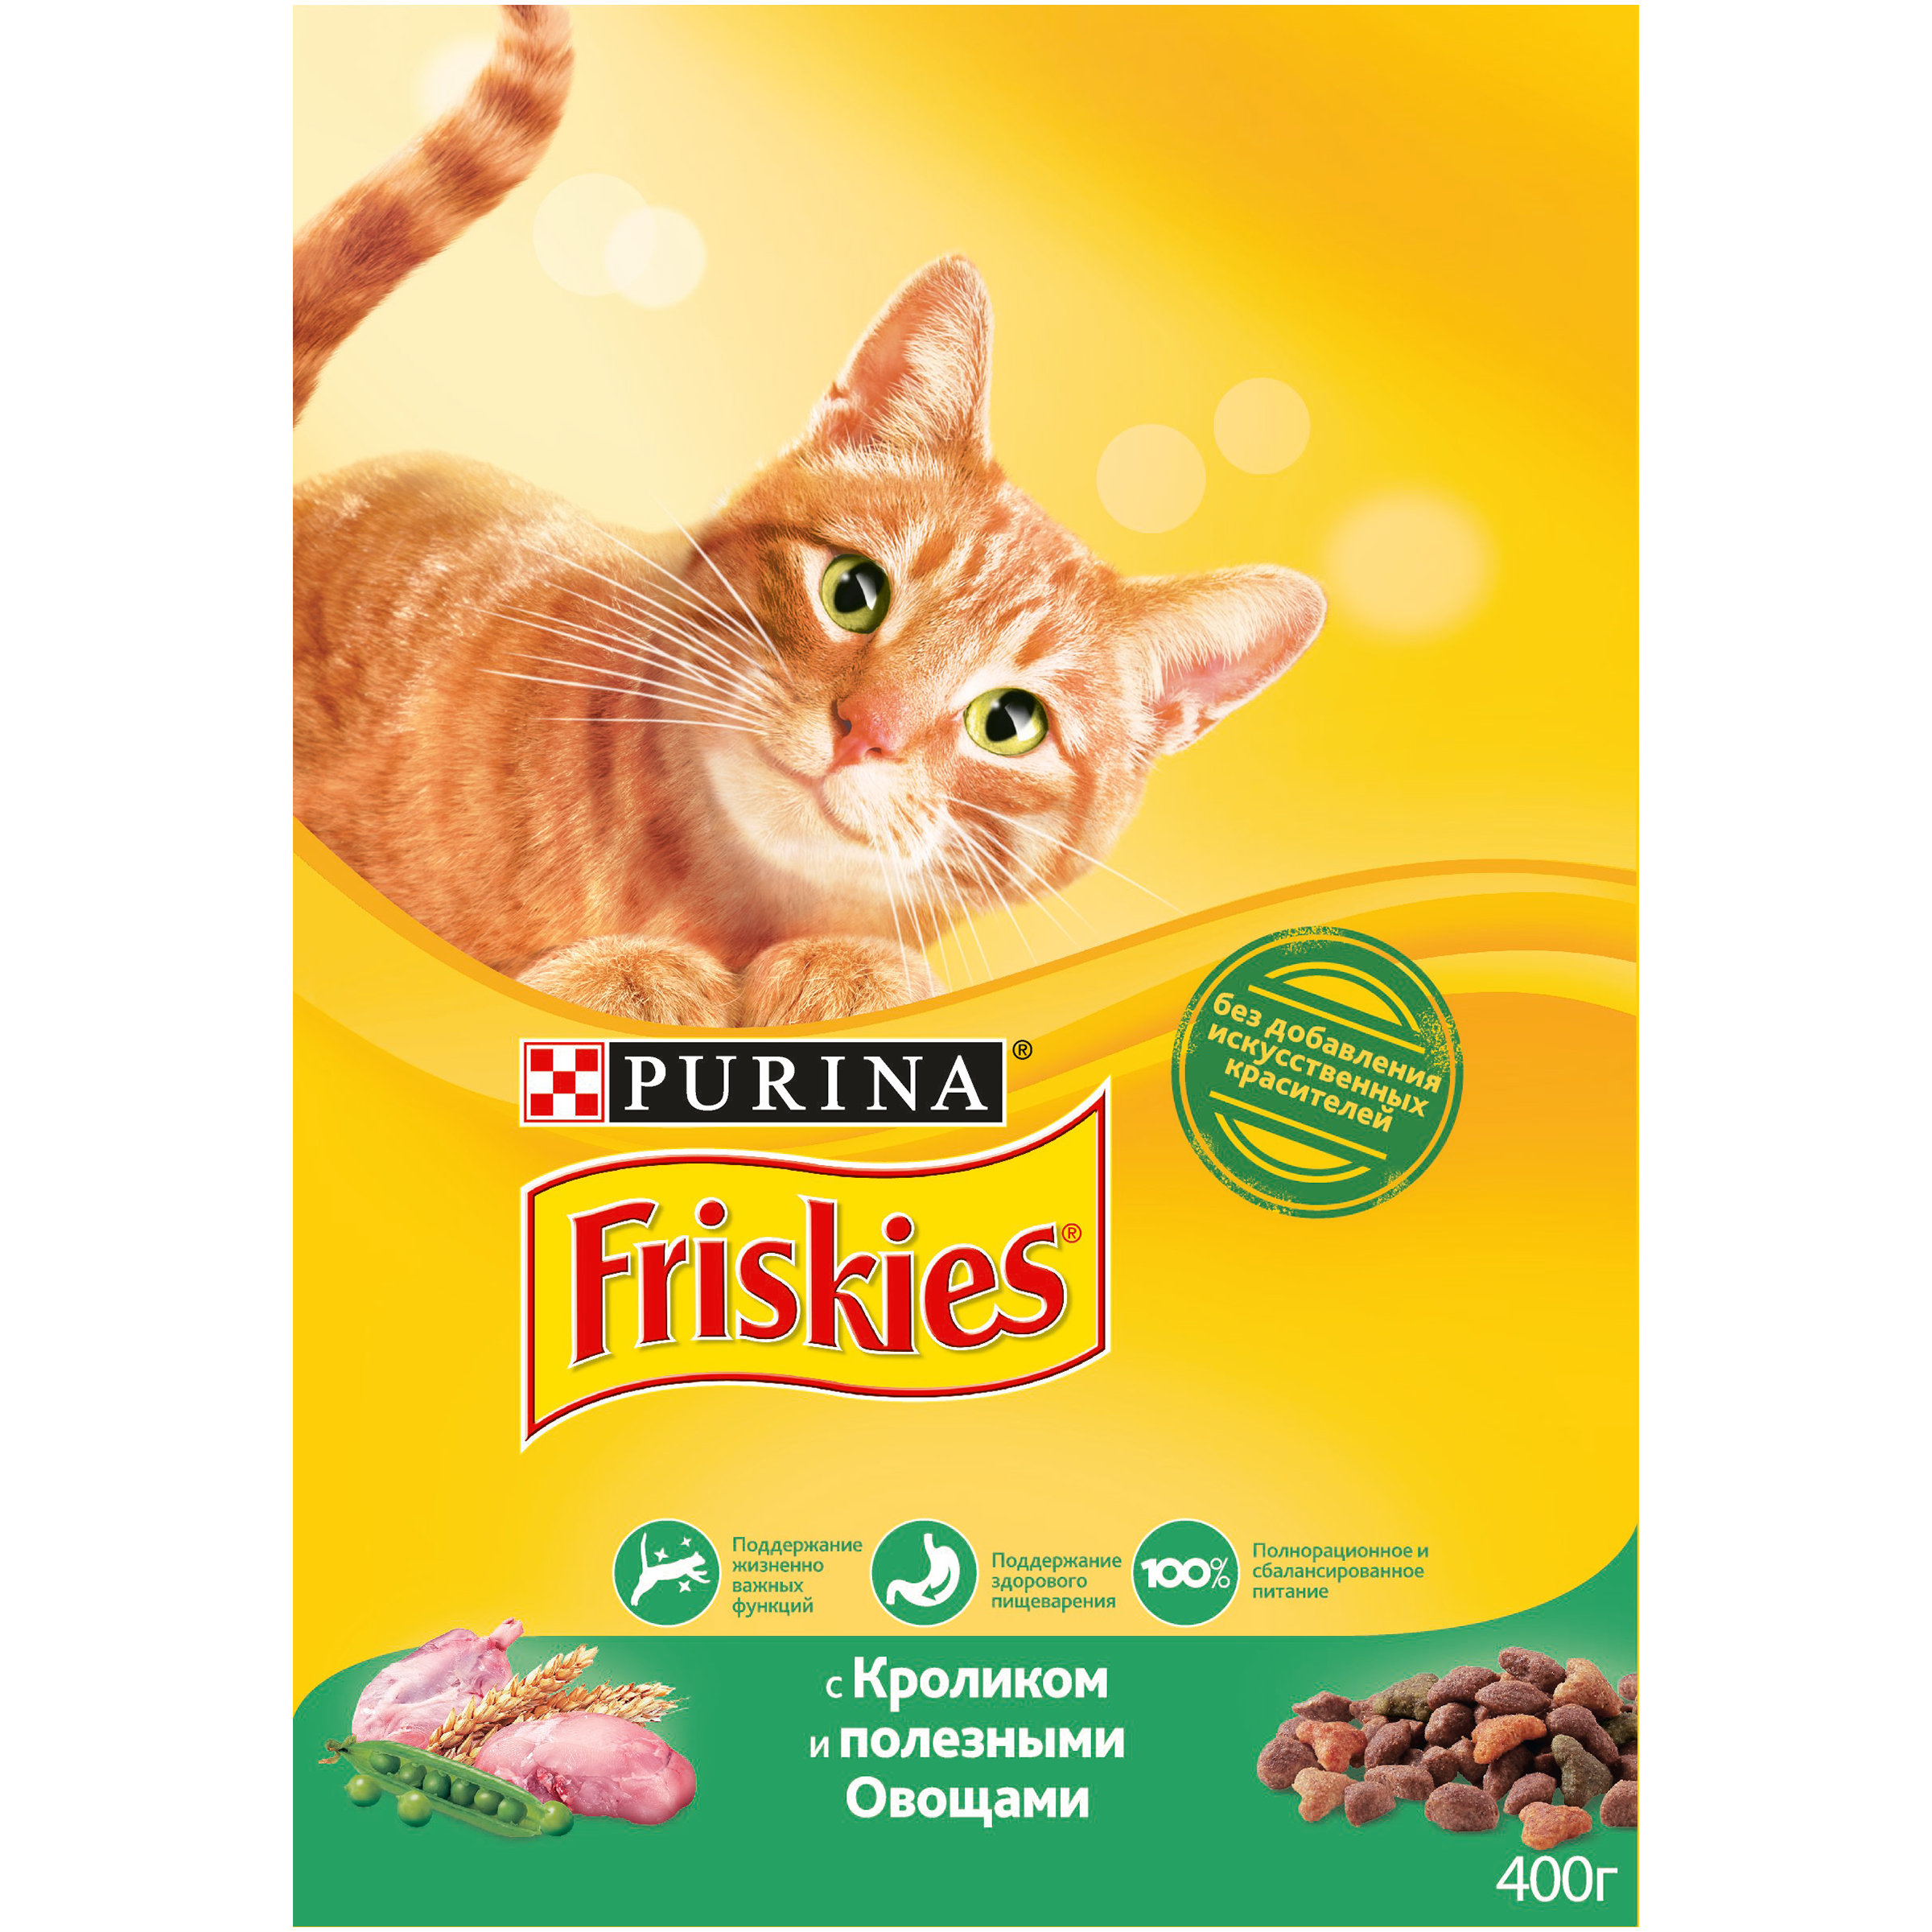 Обзор кормов для кошек фрискис (friskies)